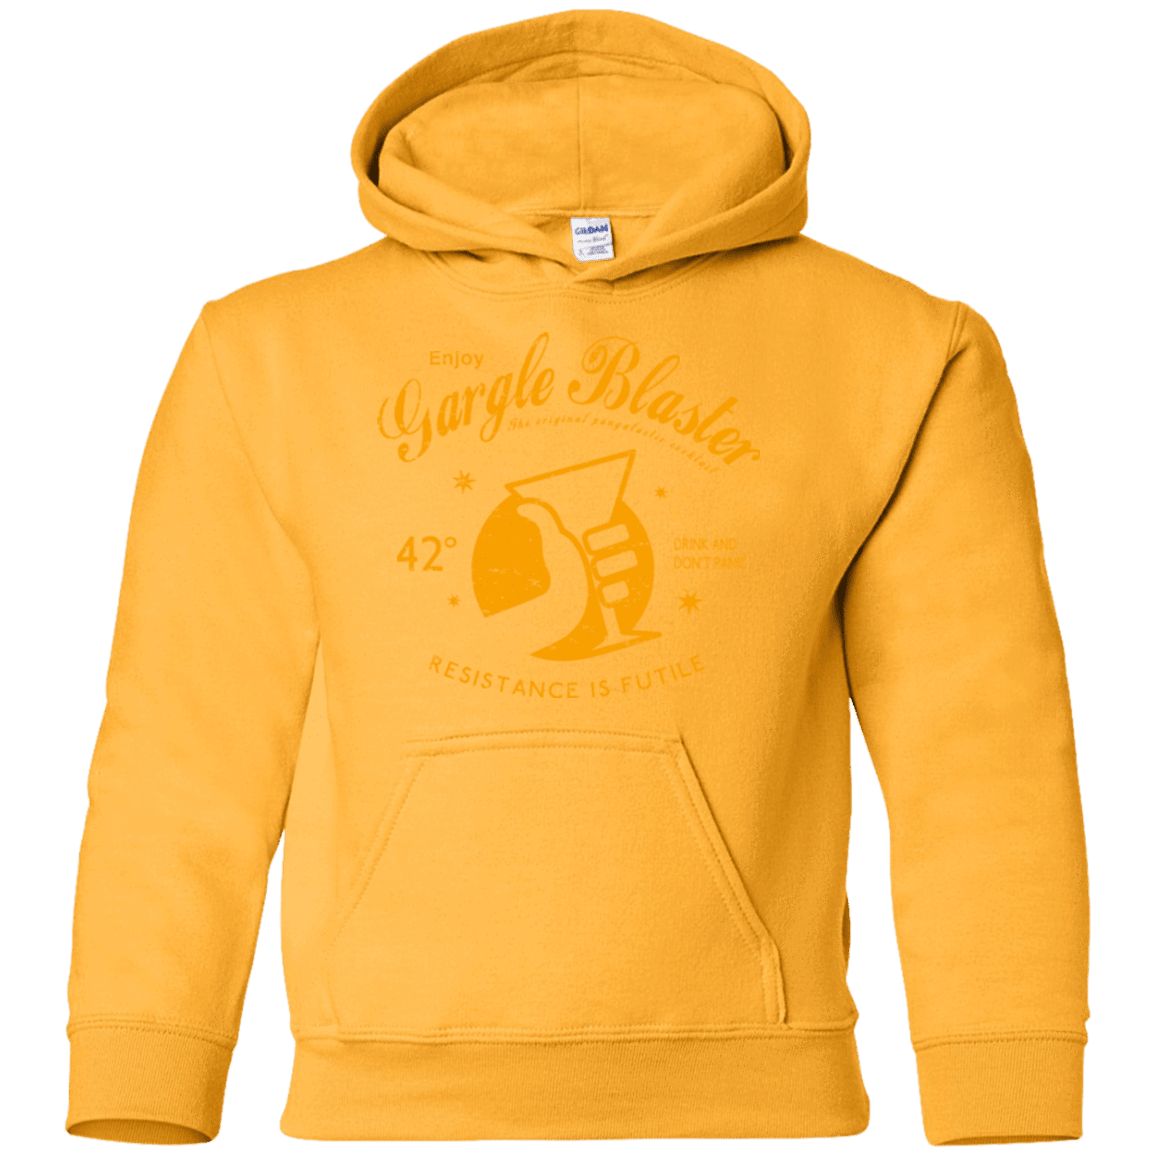 Sweatshirts Gold / YS Gargle blaster Youth Hoodie